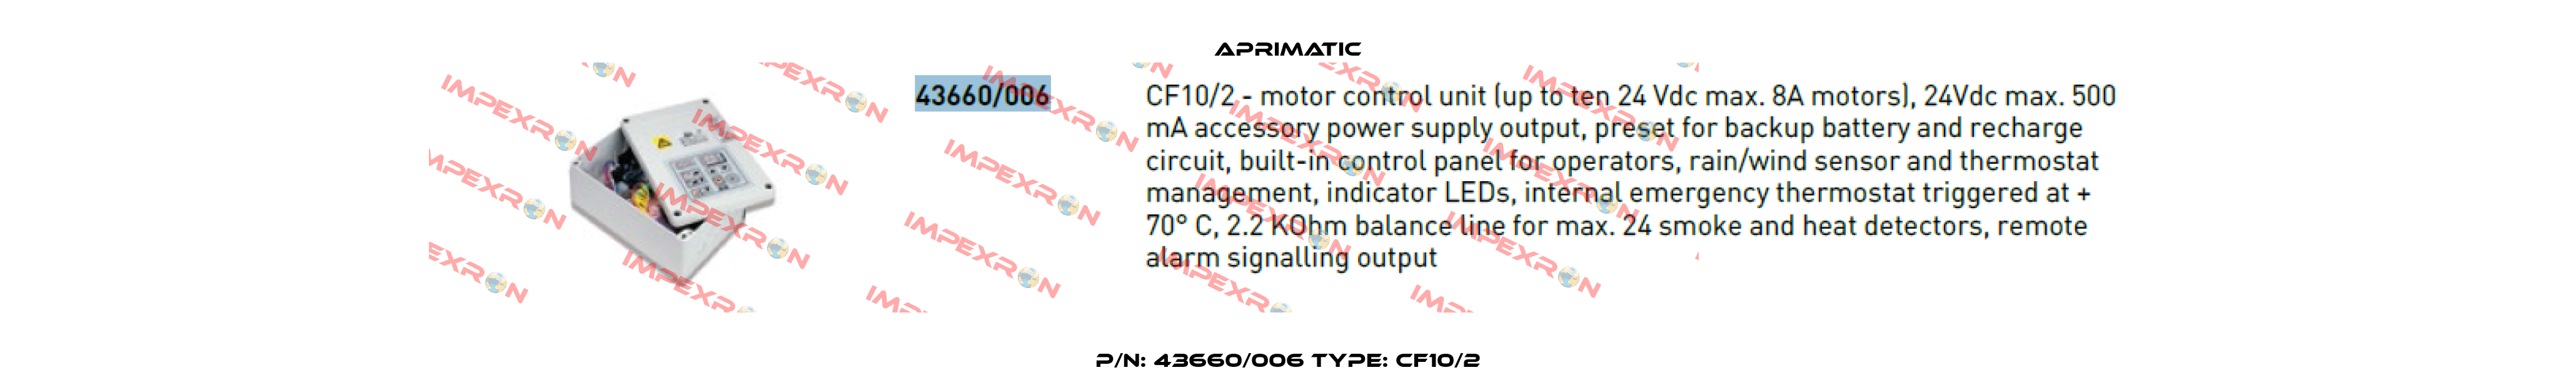 P/N: 43660/006 Type: CF10/2 Aprimatic